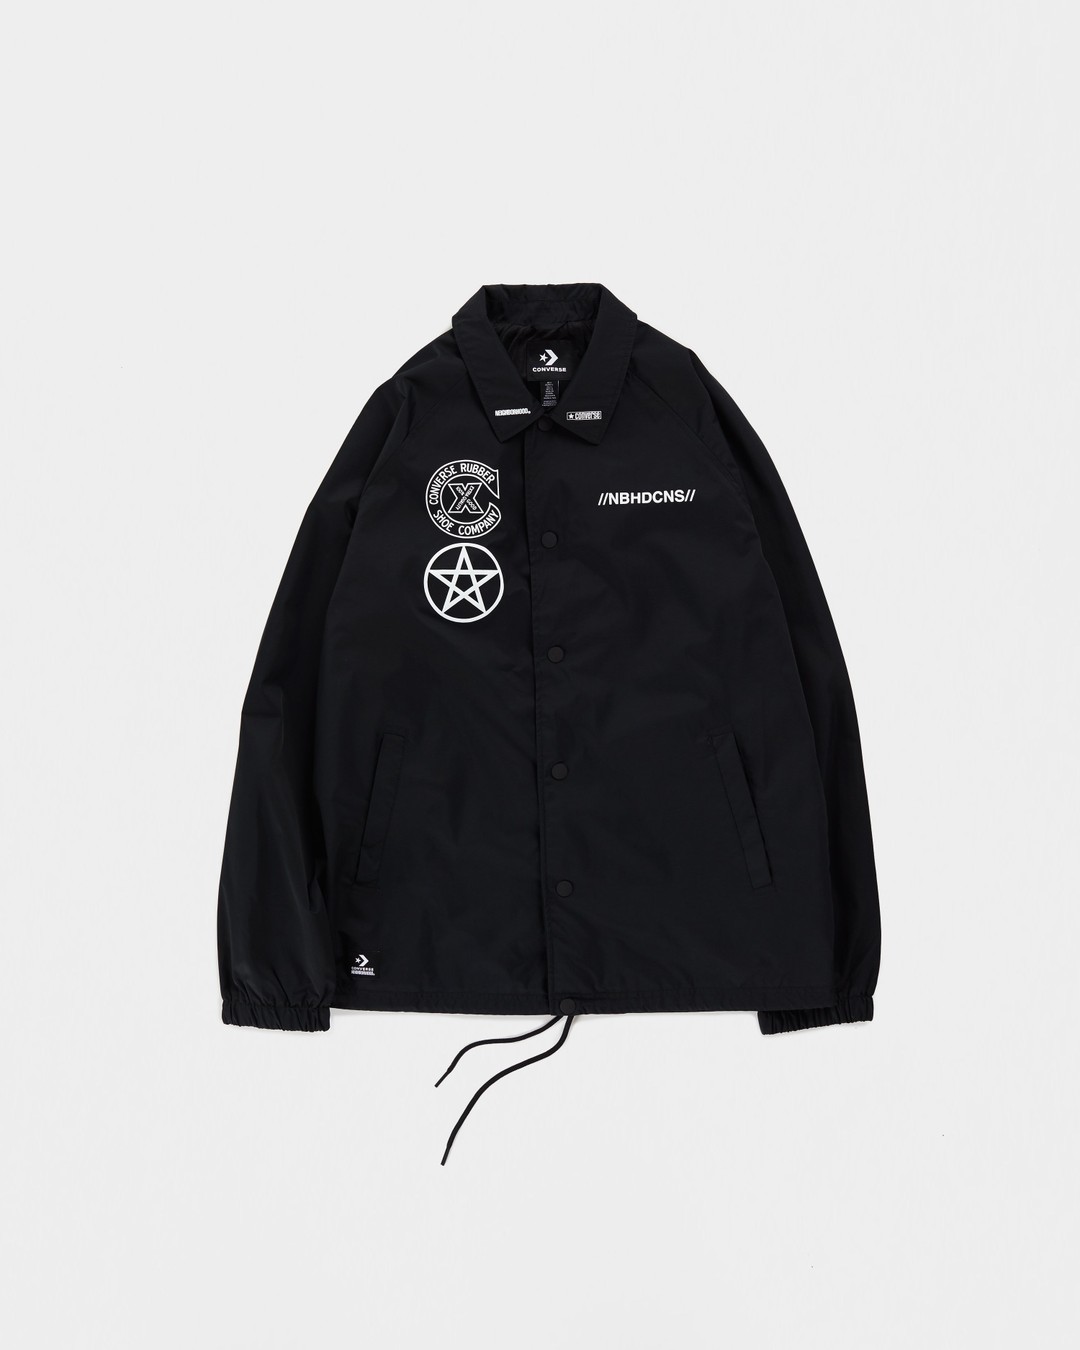 Converse x NBHD – Black Coaches Jacket - Jackets - Black - Image 1